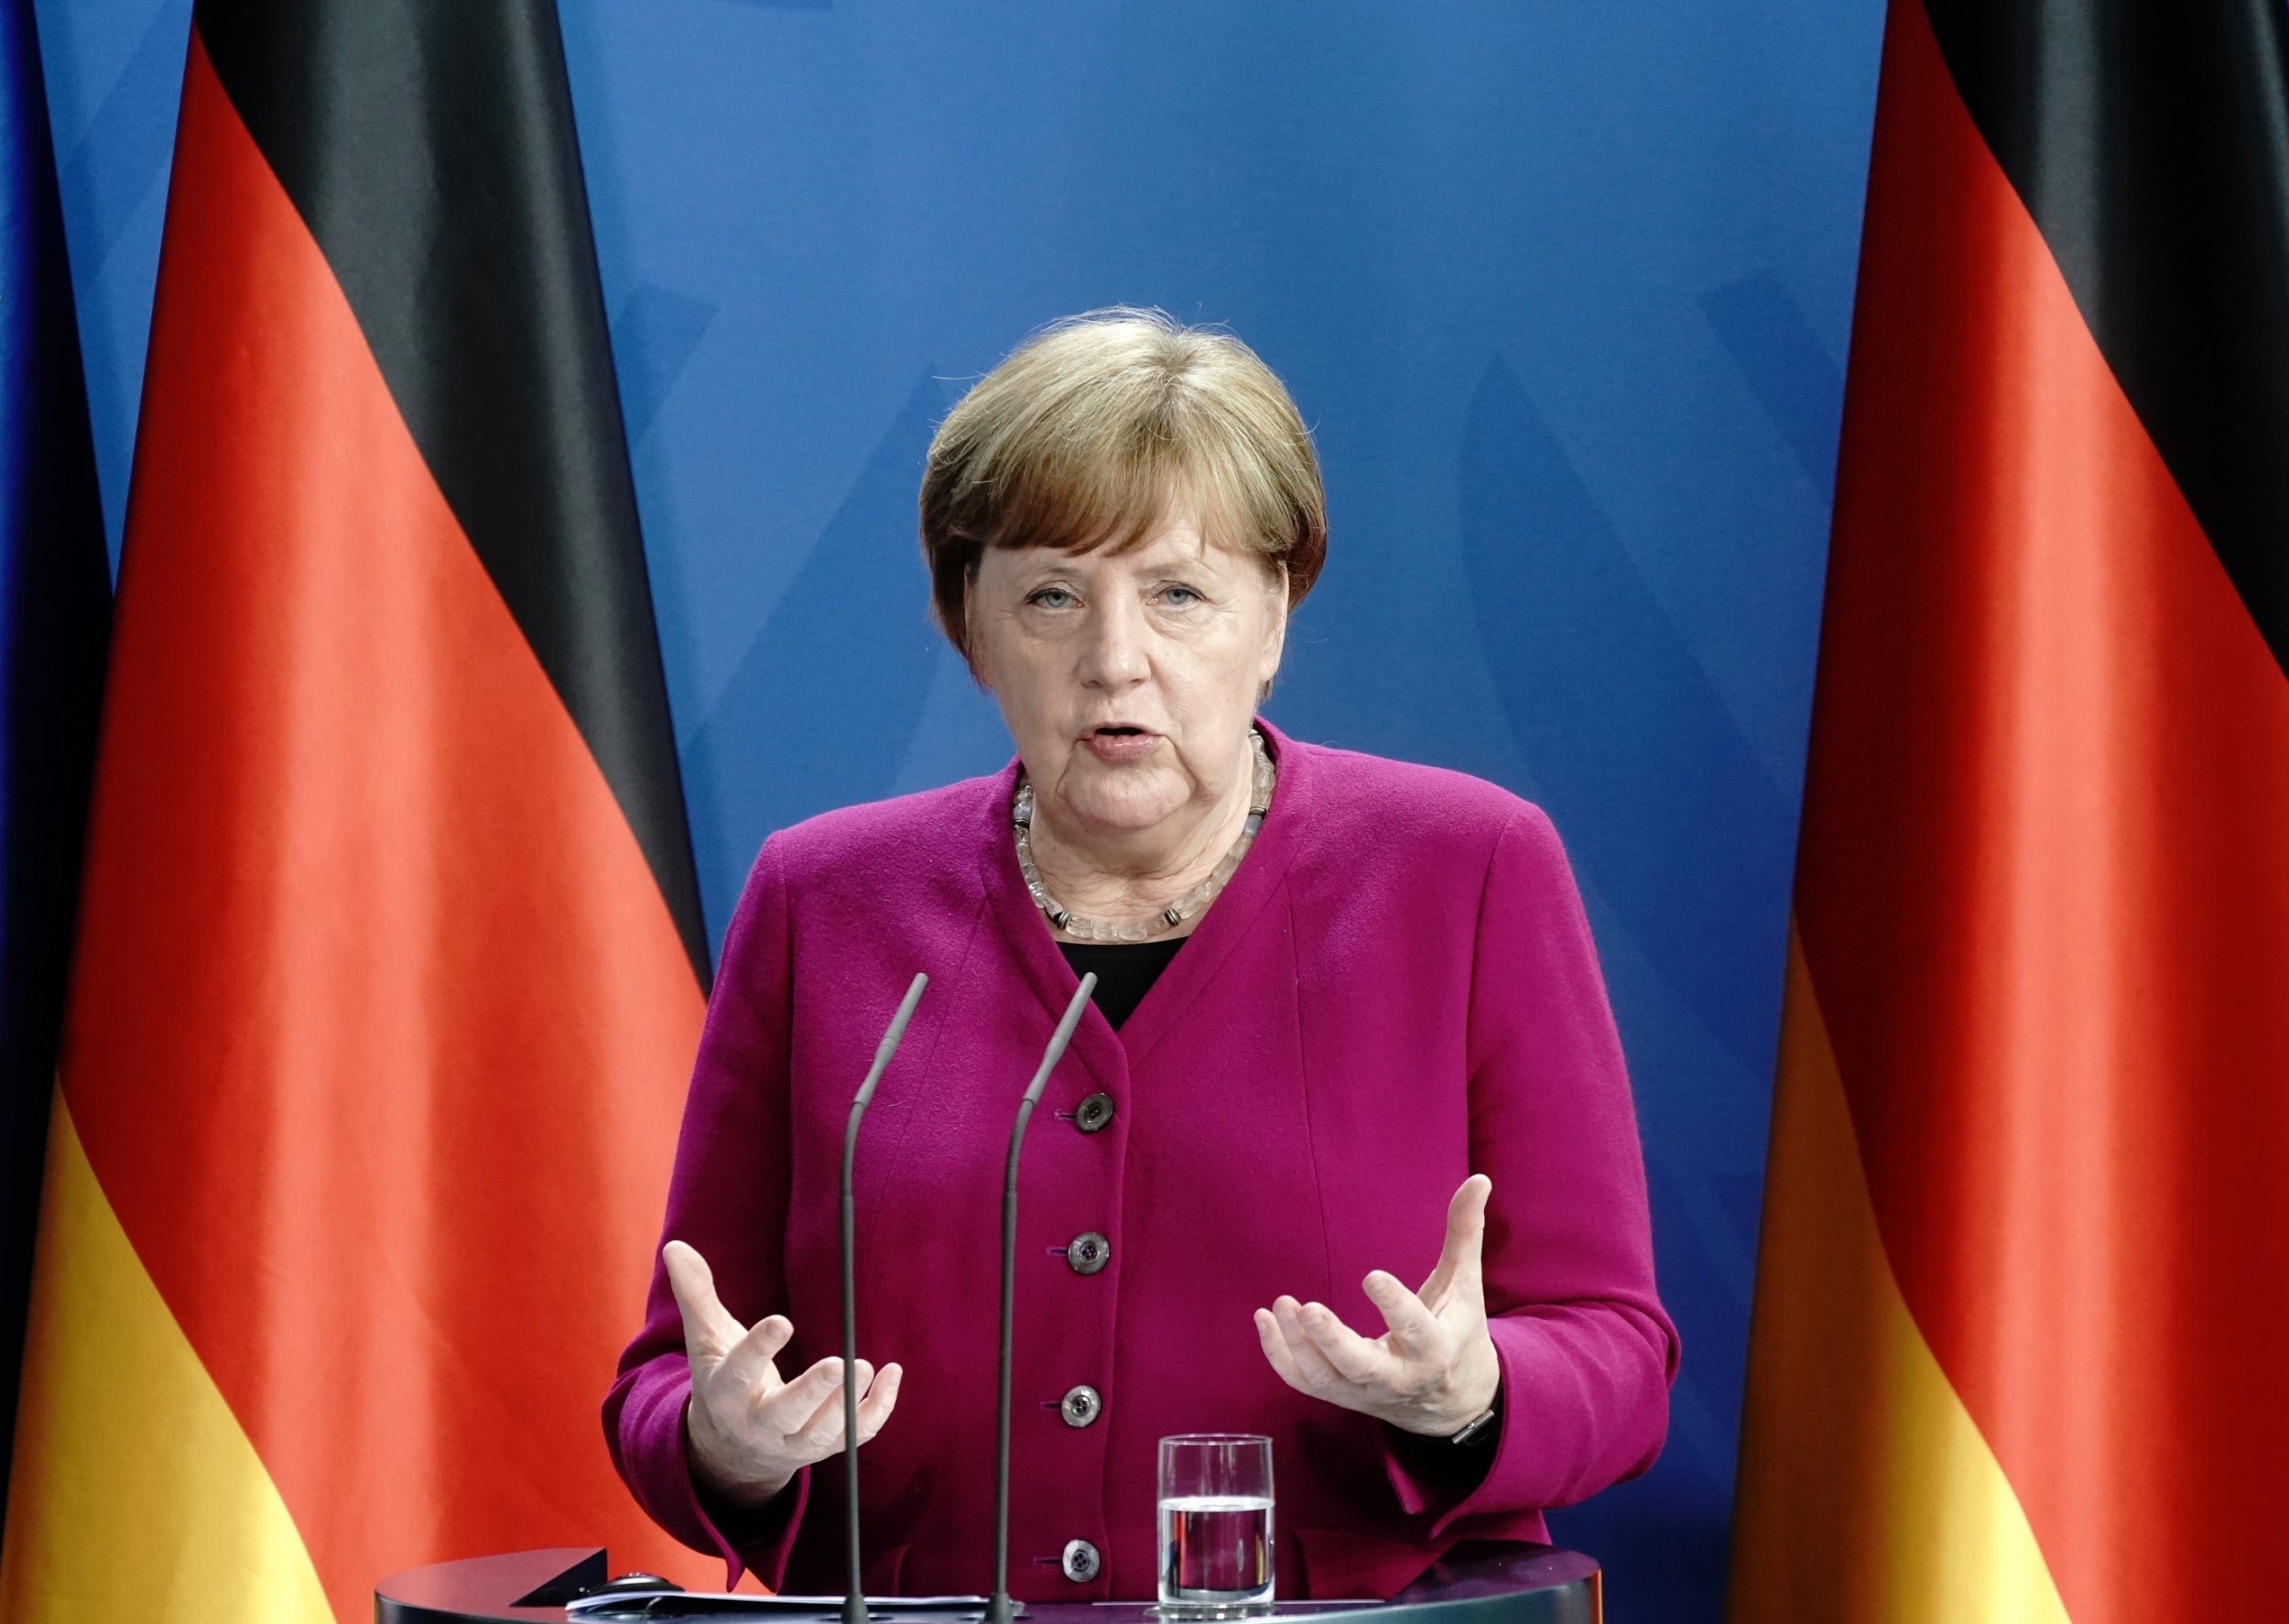 German chancellor Angela Merkel has earned praise for her handling of the pandemic